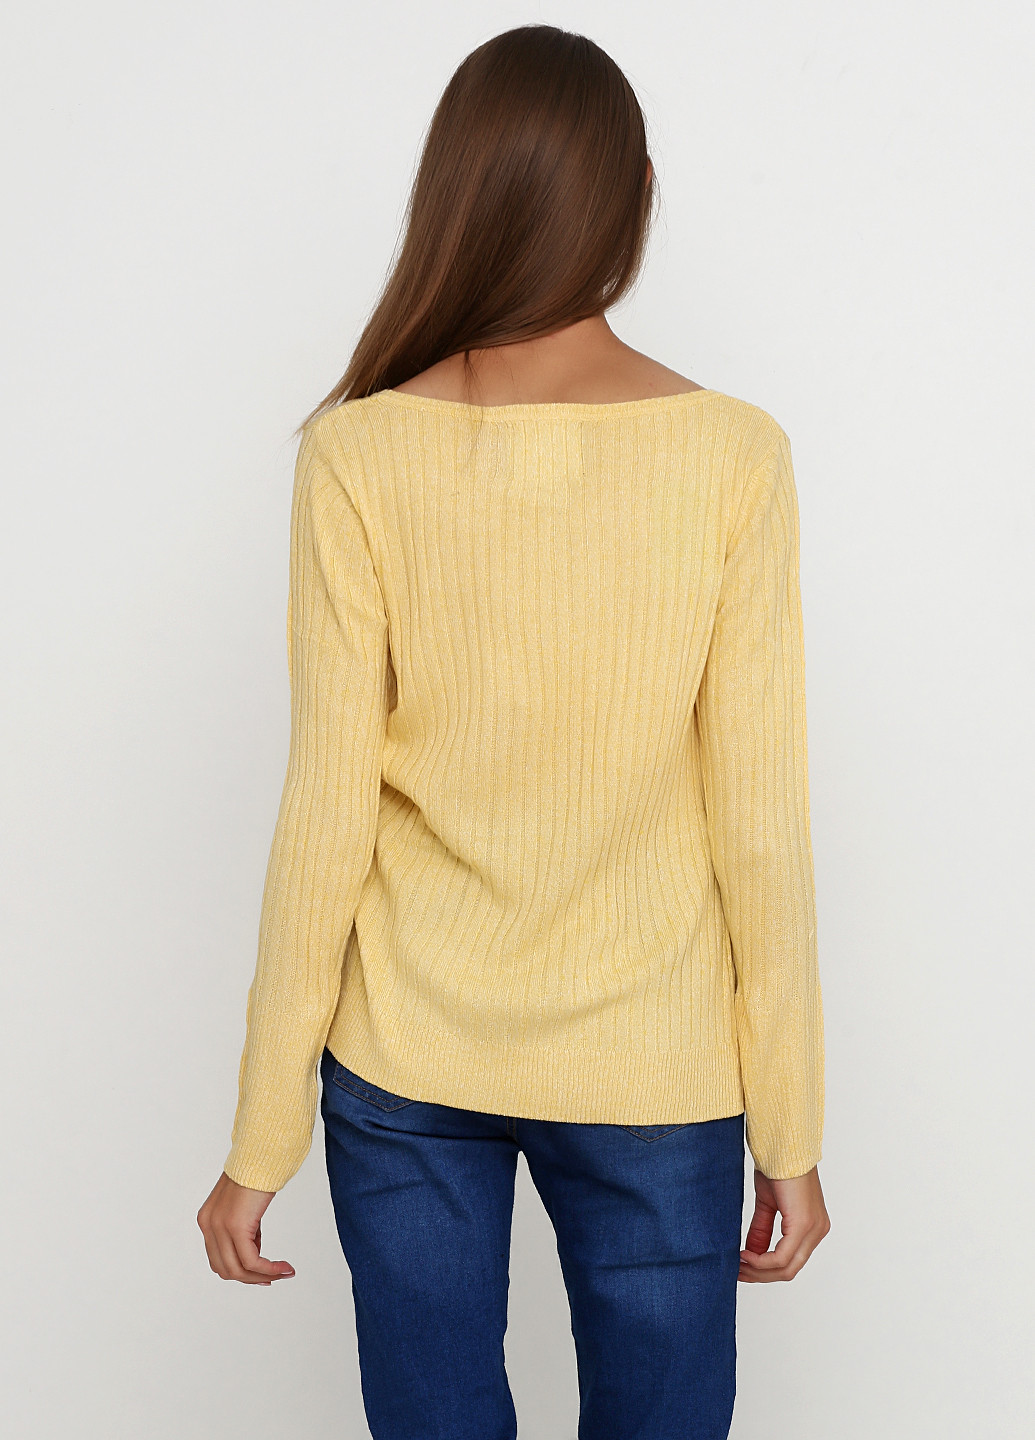 Жовтий демісезонний пуловер пуловер CHD